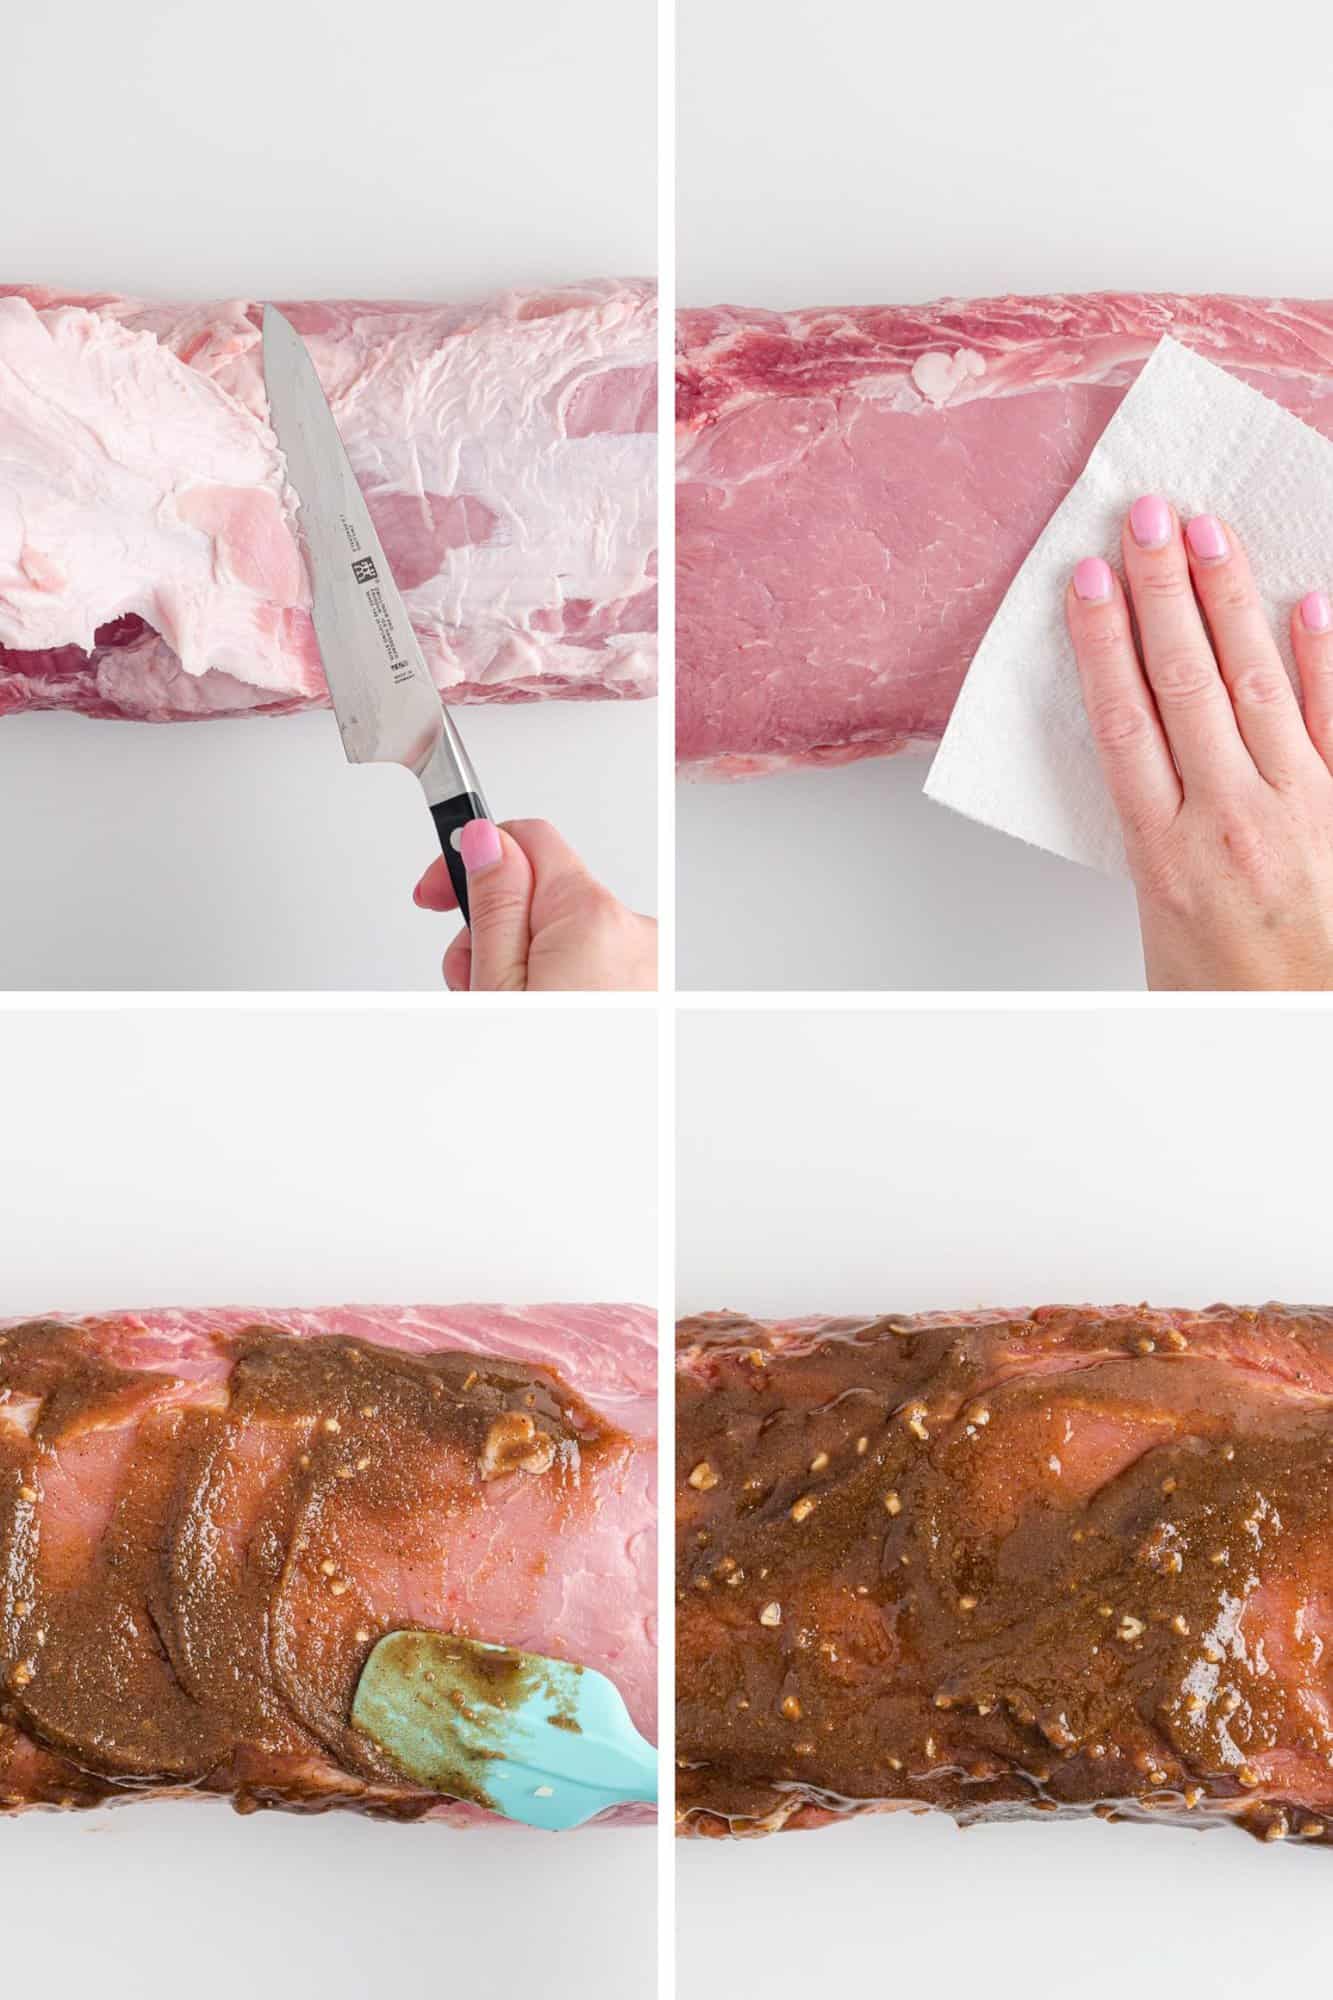 Pork being prepped.